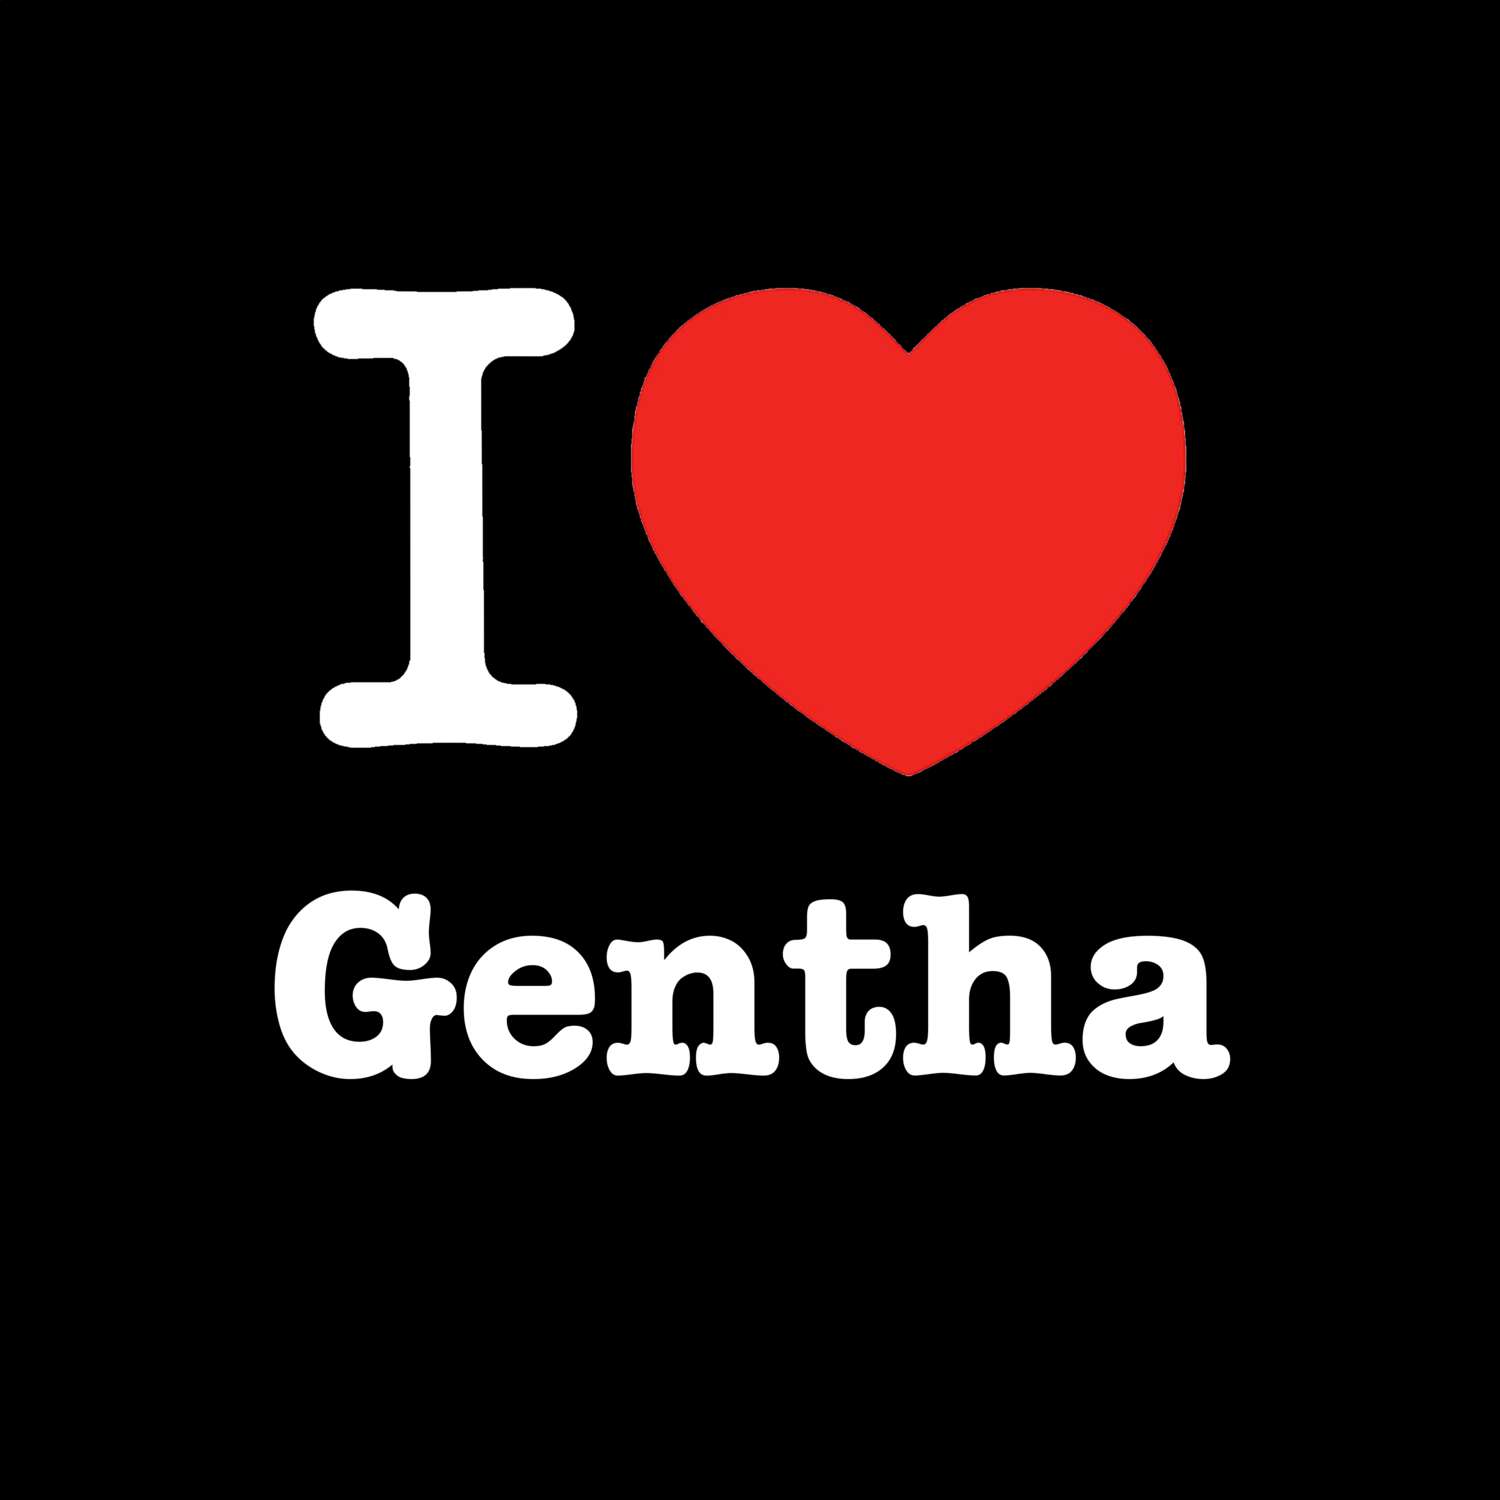 Gentha T-Shirt »I love«